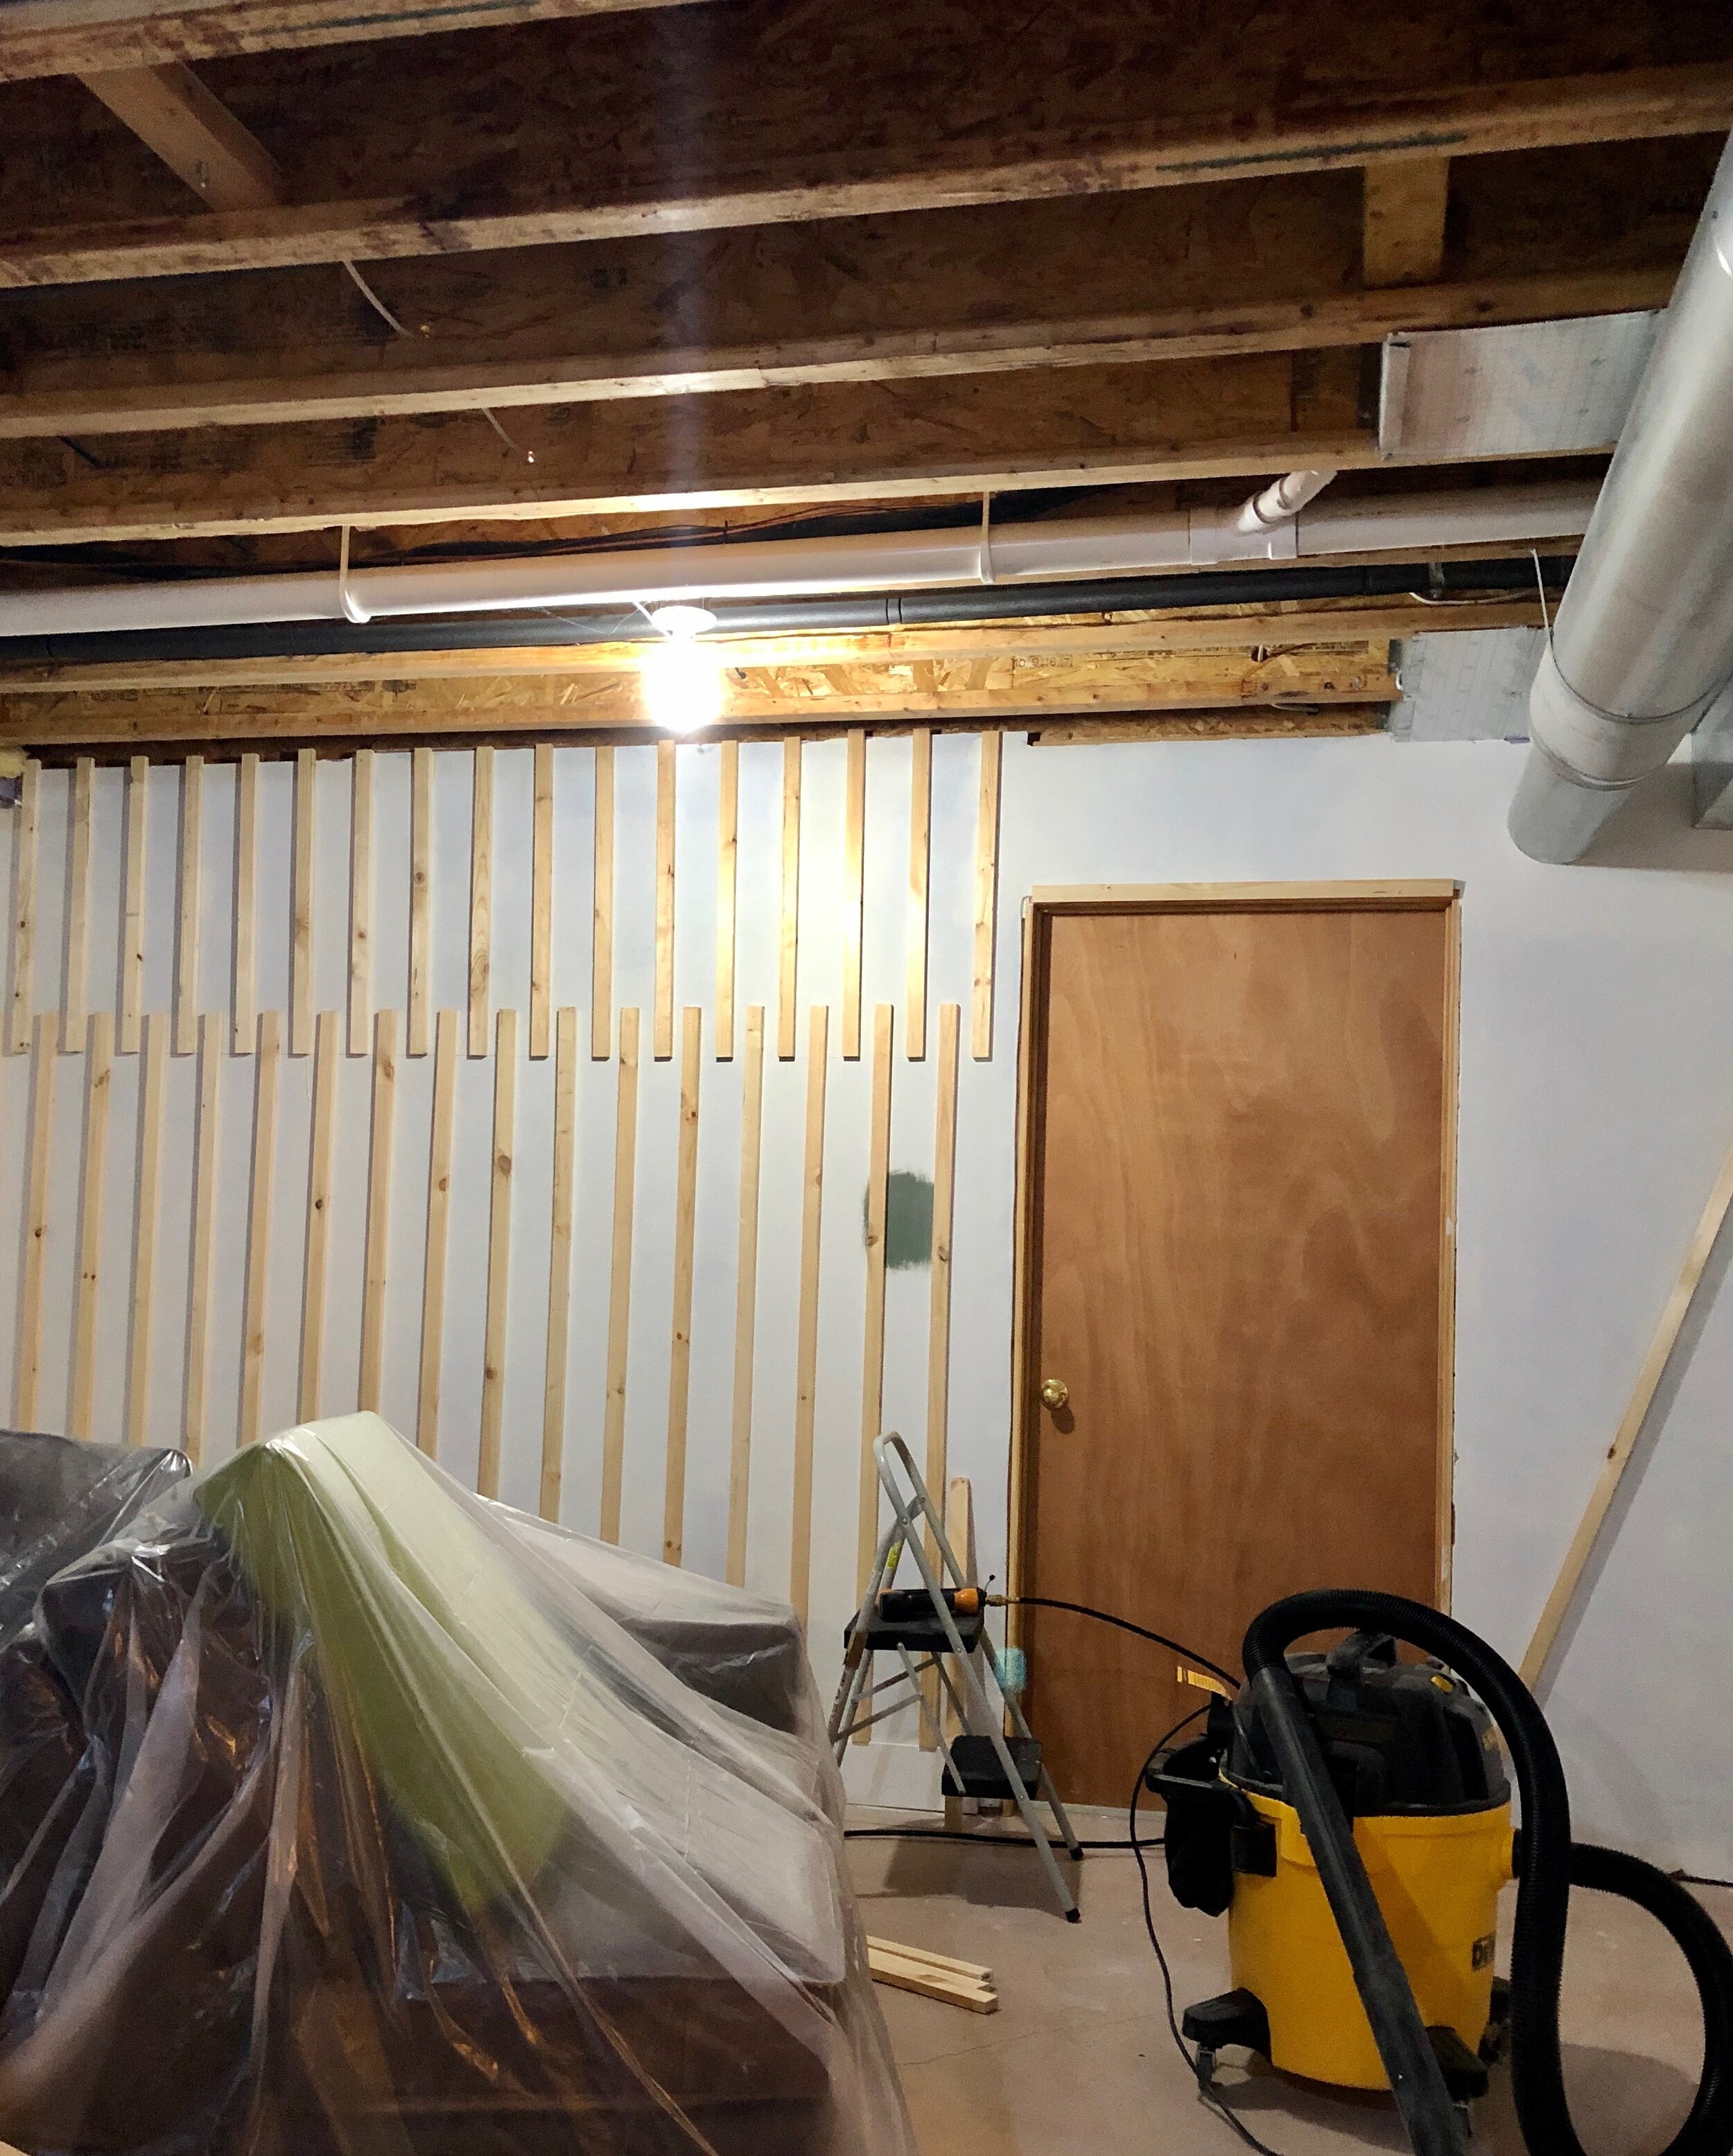 Unfinished basement ceiling